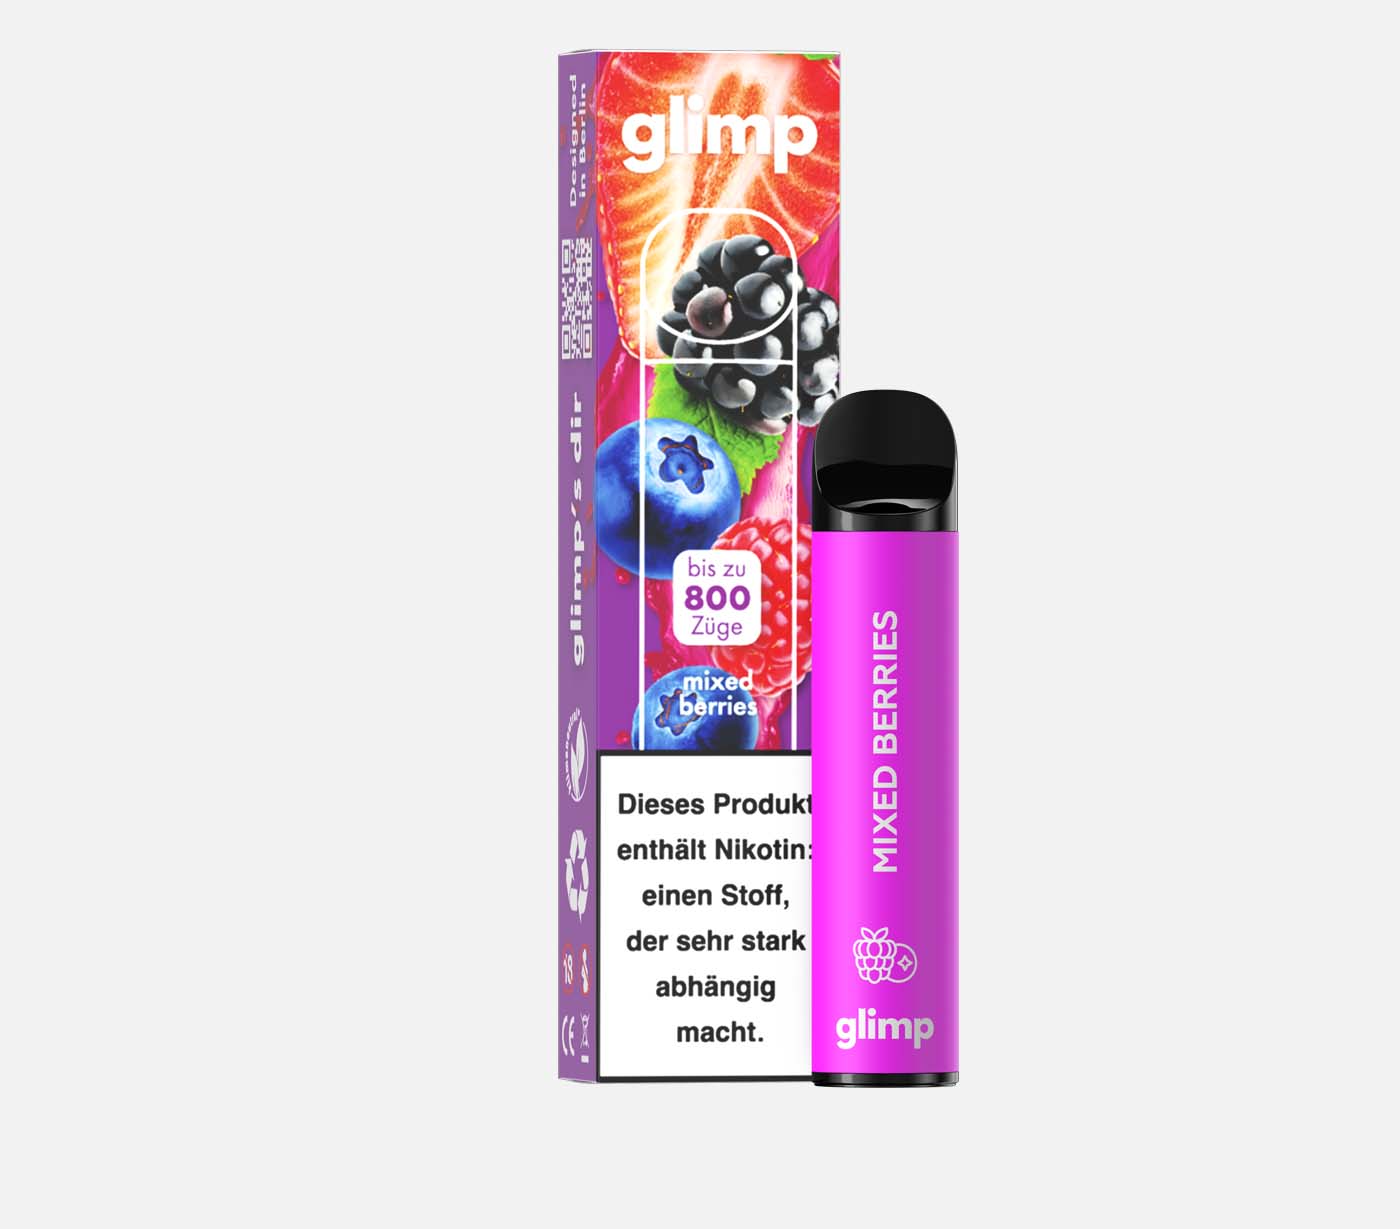 GLIMP 800 mixed berries